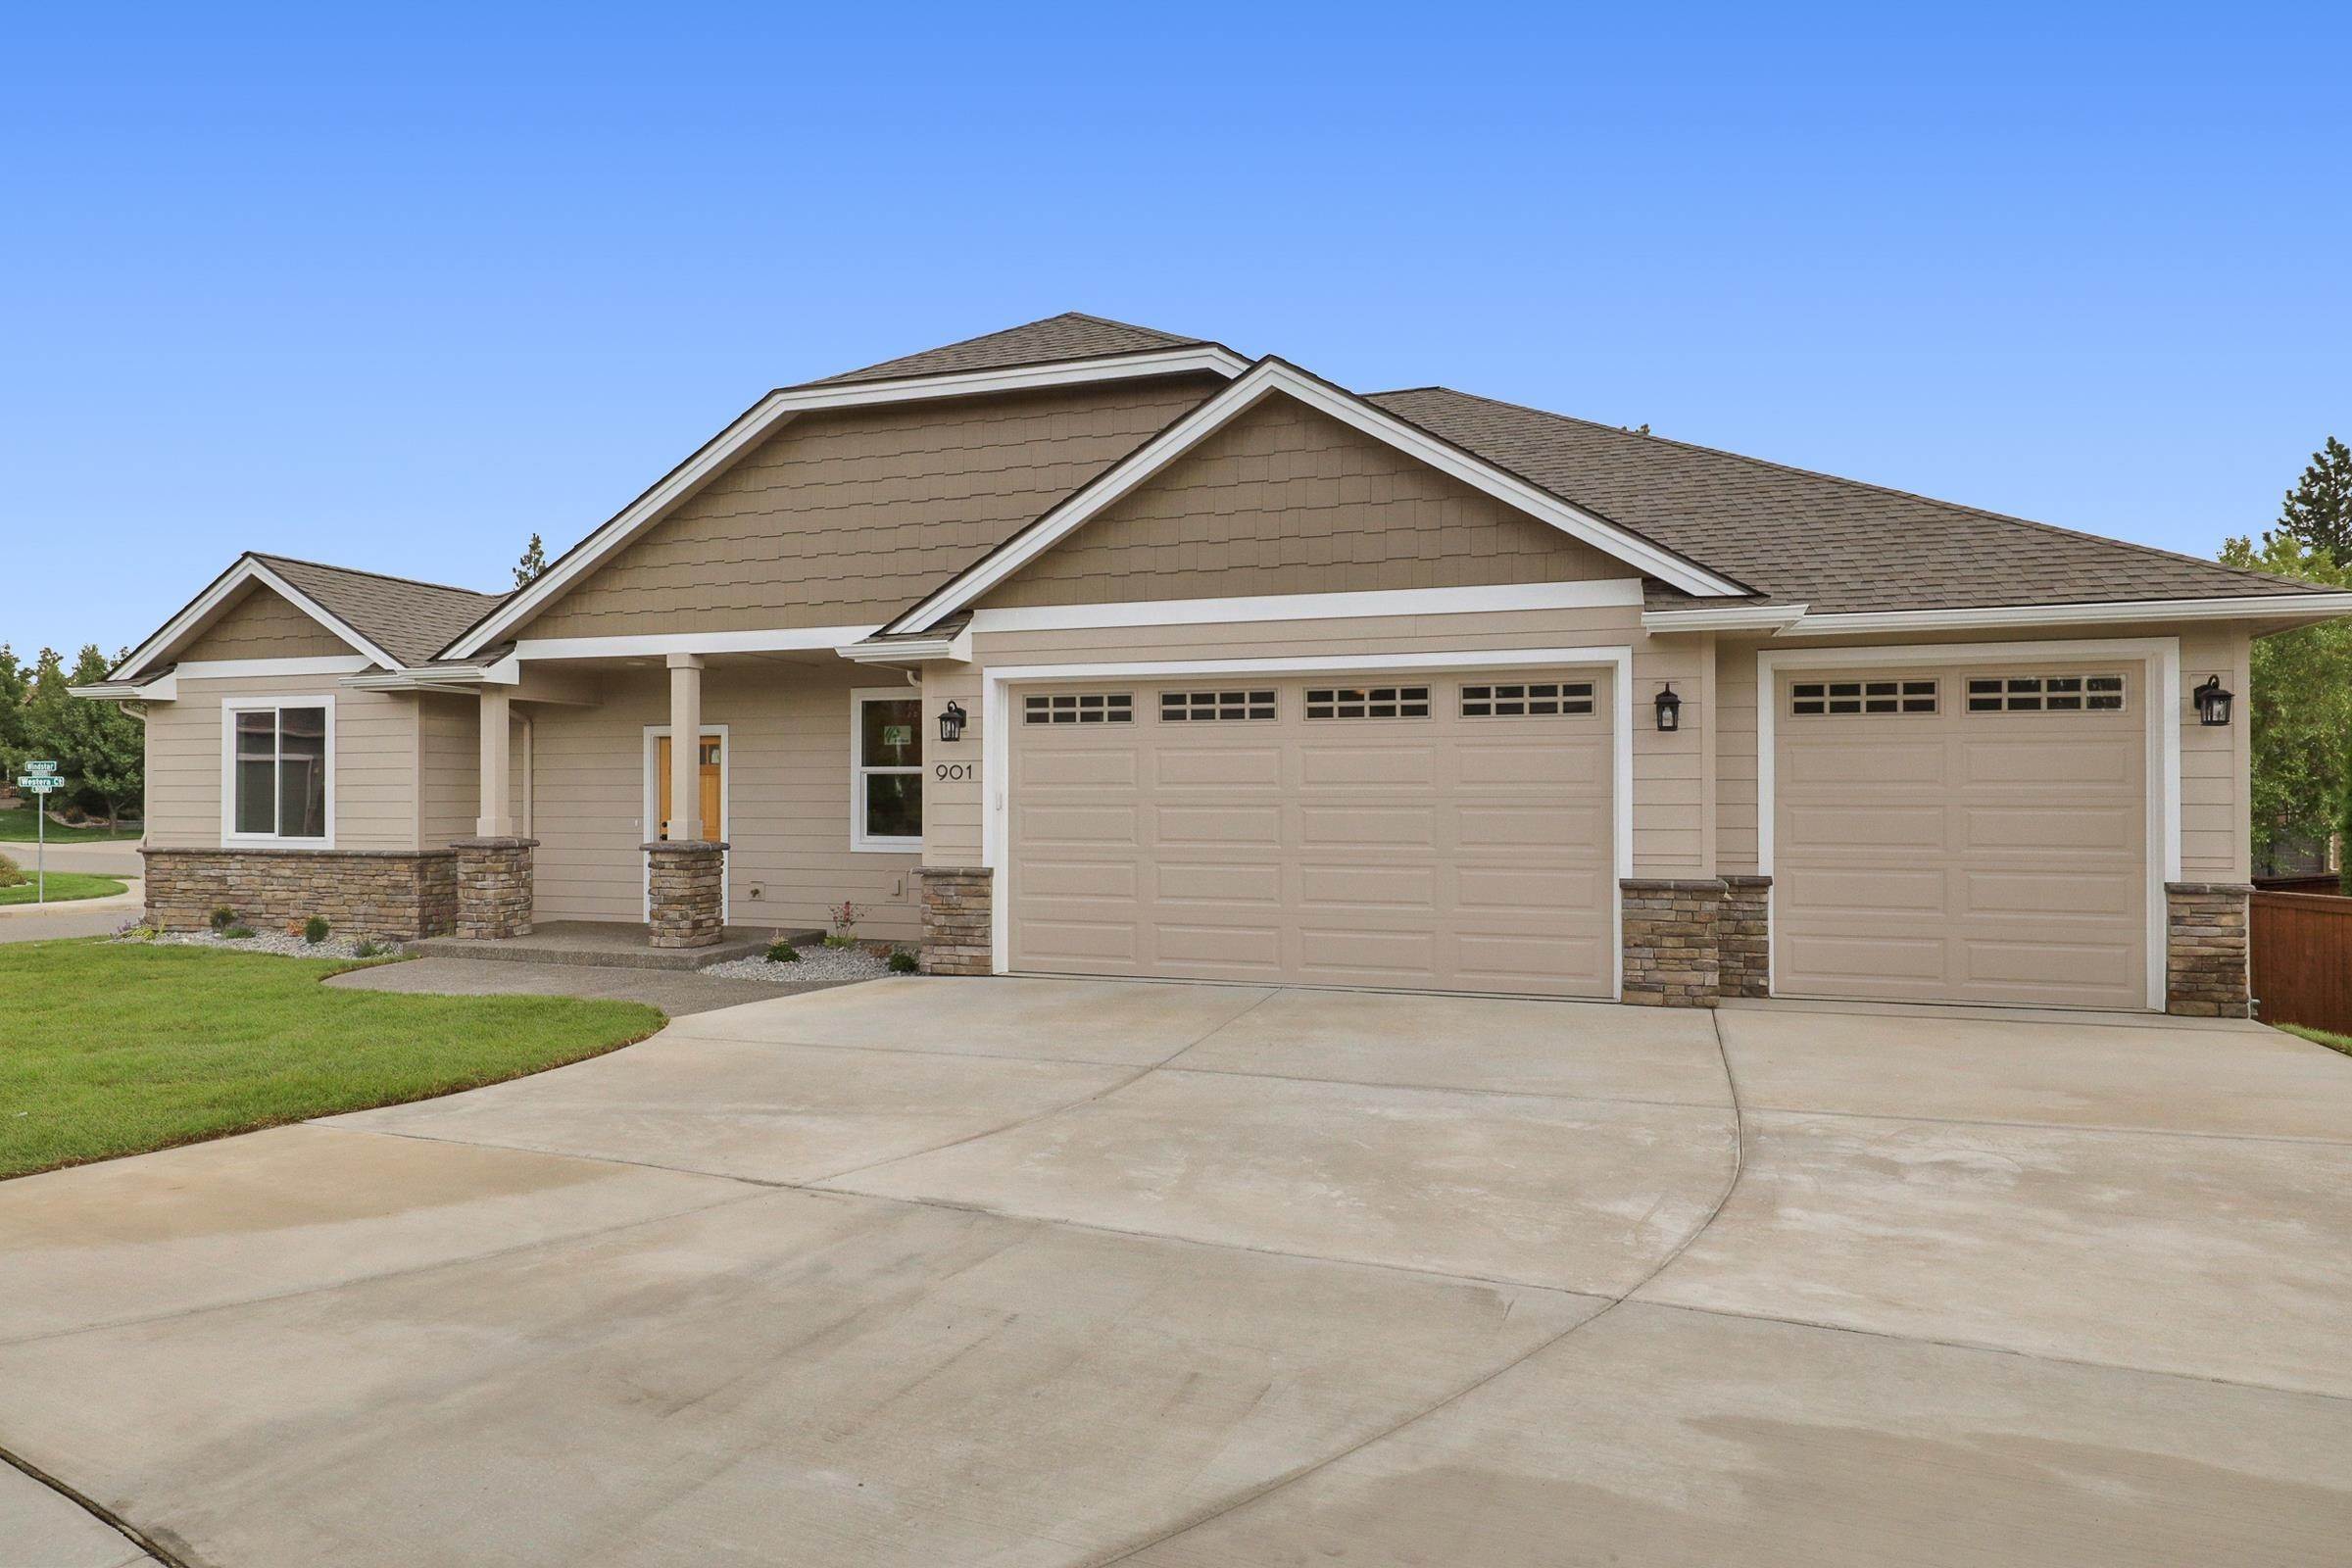 3. Single Family Homes for Sale at 901 W Westera Court Spokane, Washington 99224 United States